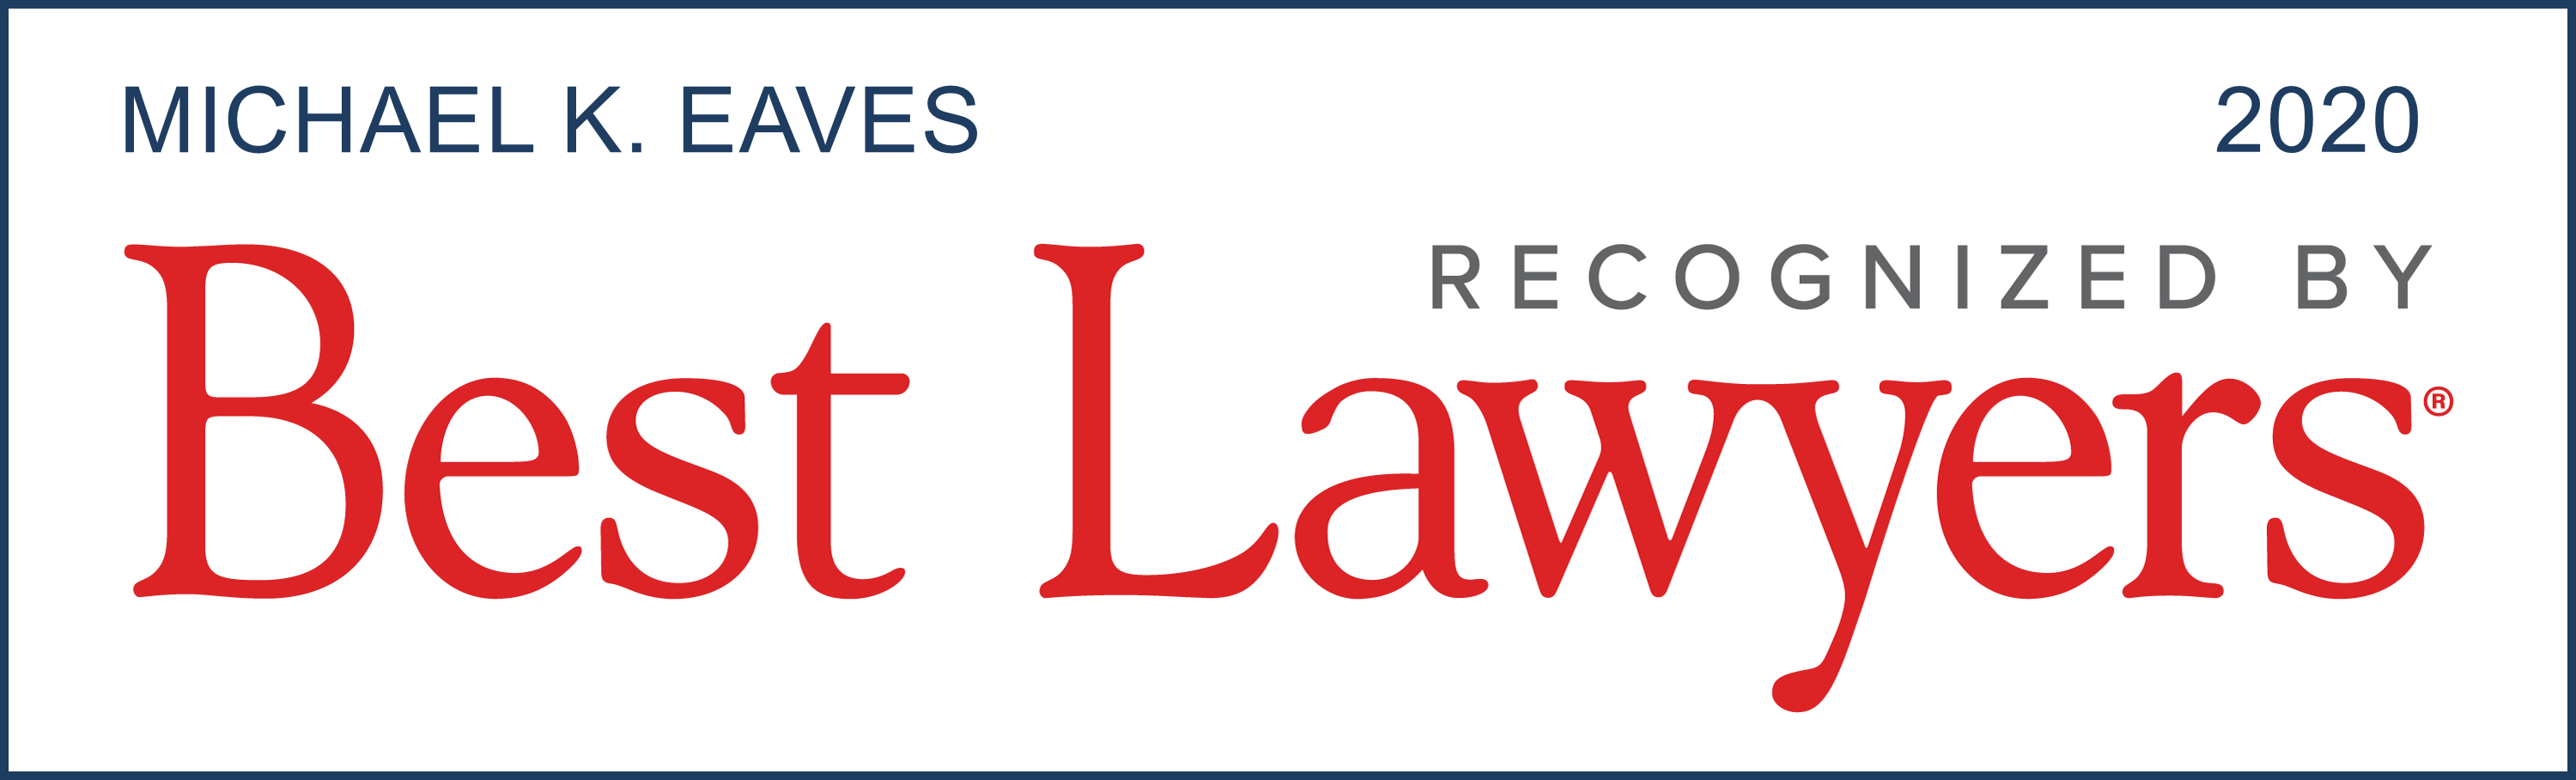 U.S.News & World Report - Best Lawyers 2020